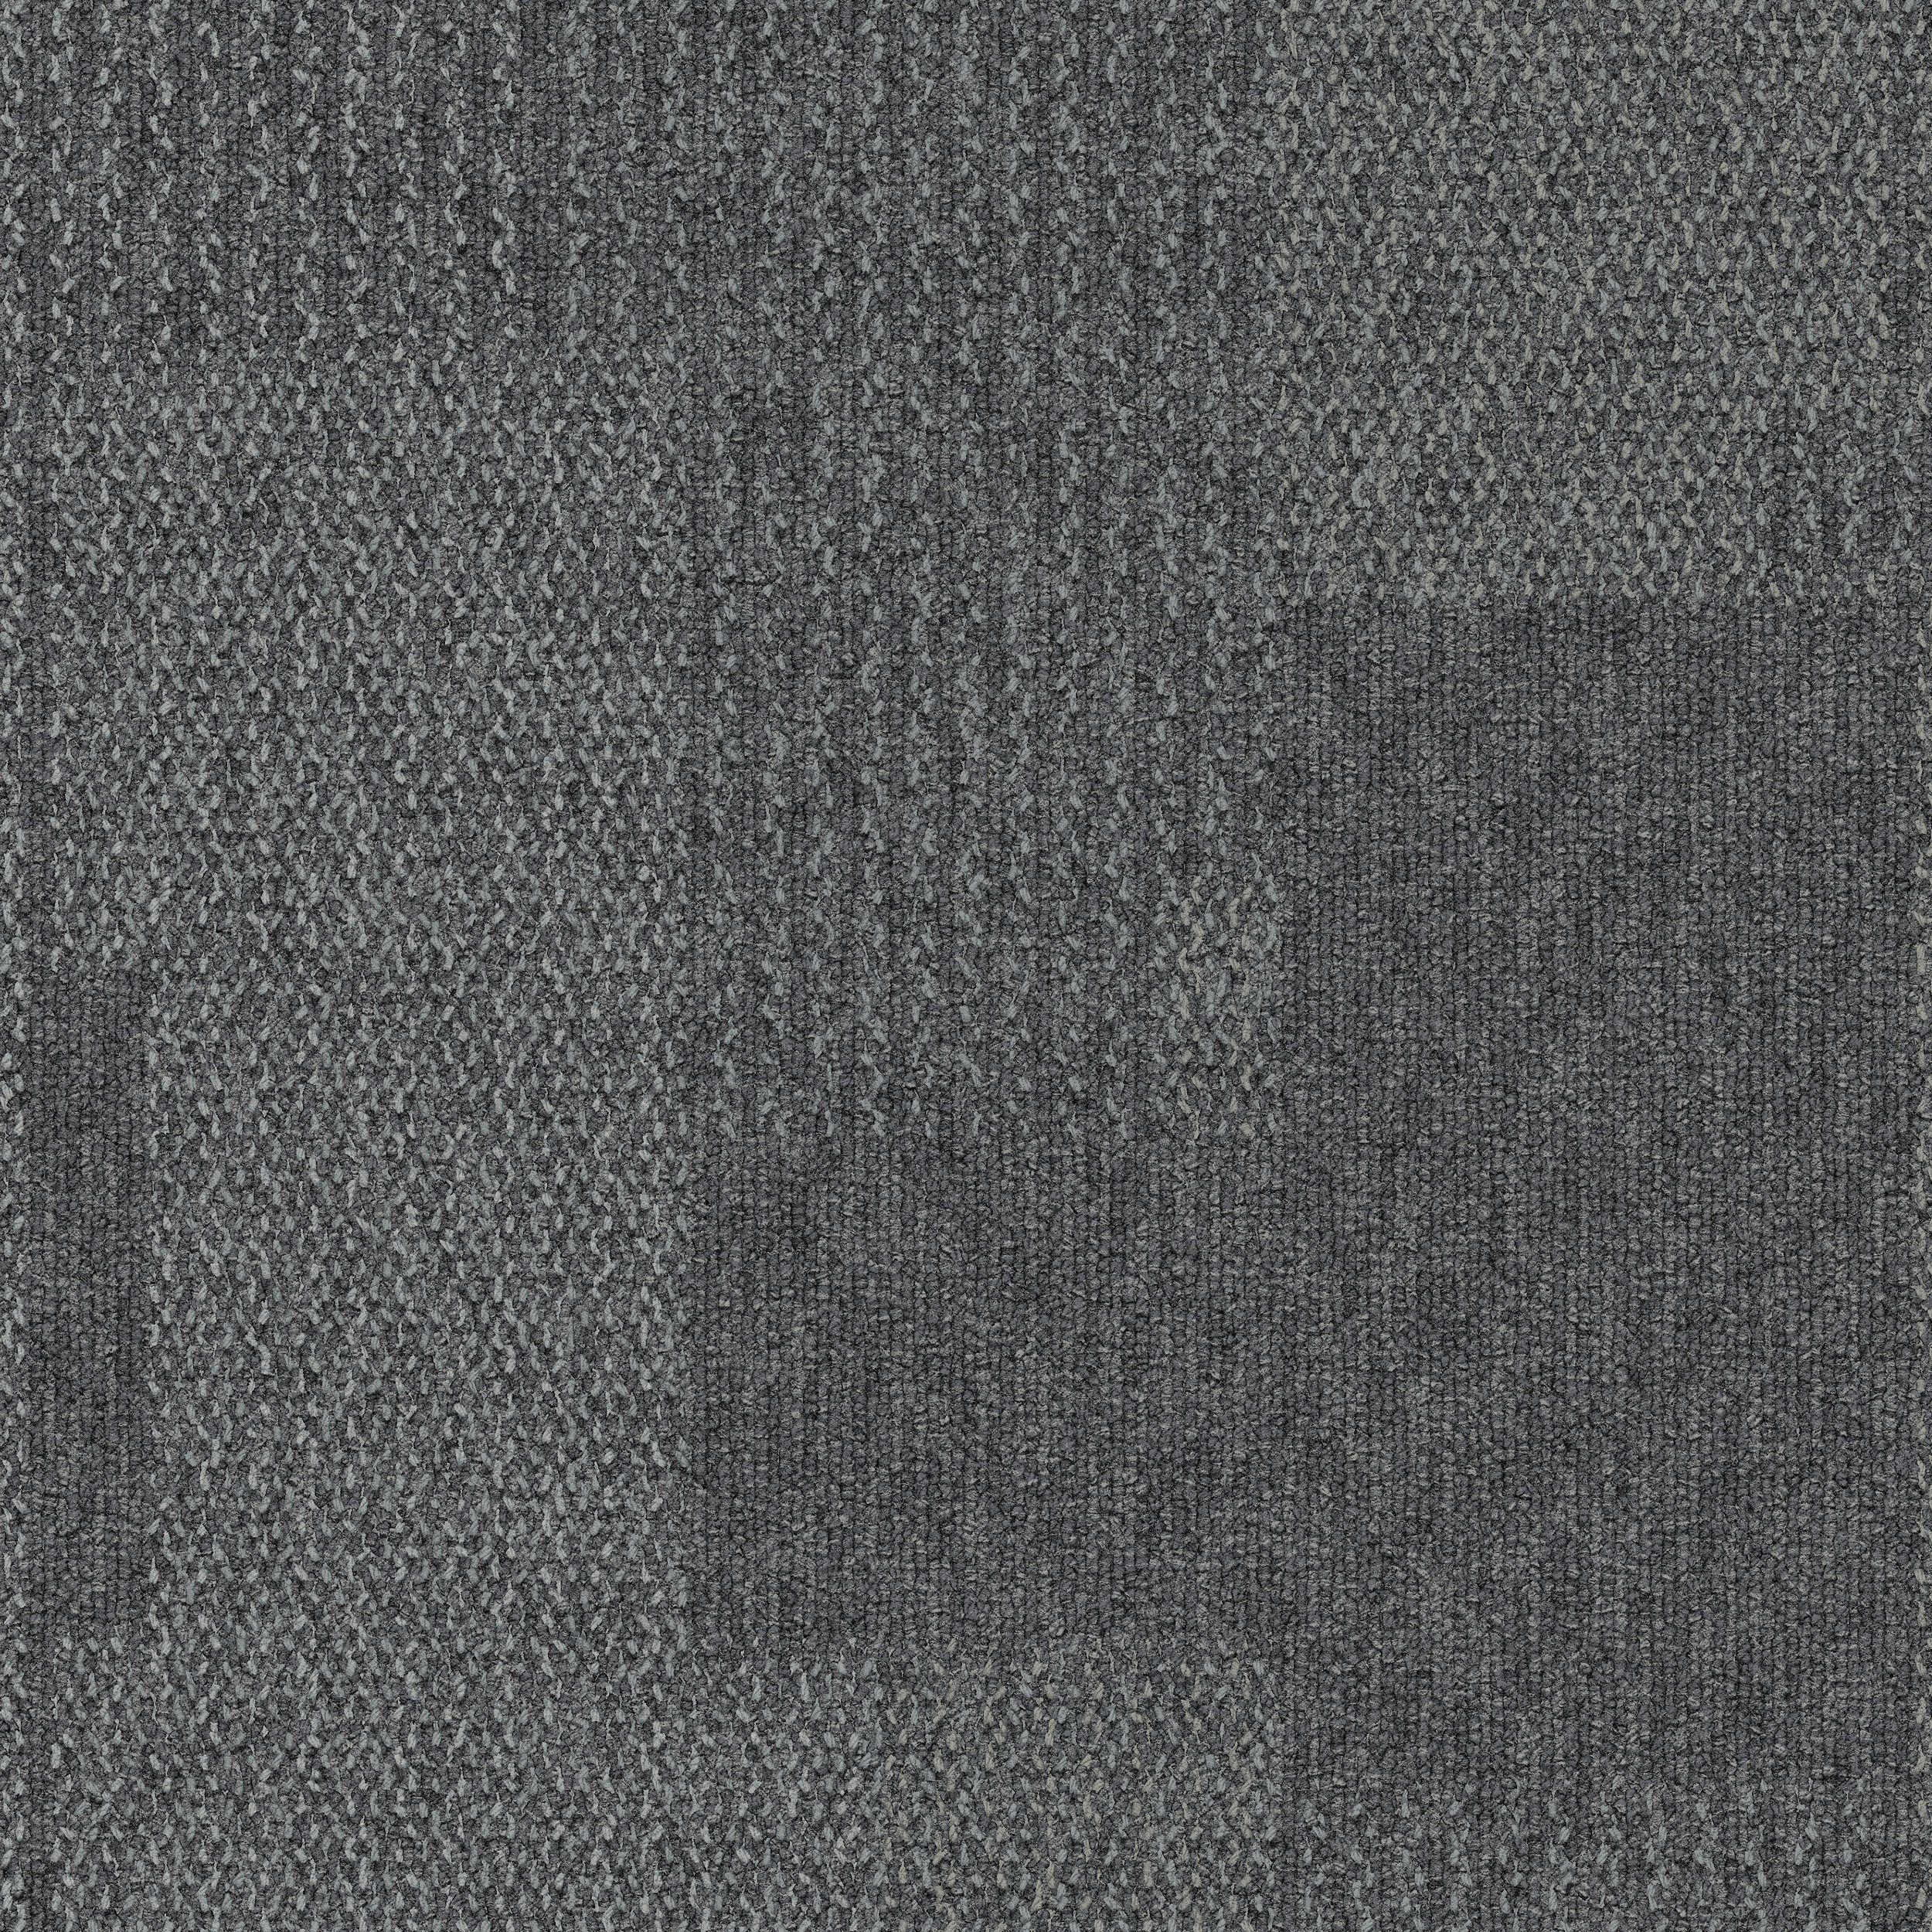 Transformation Carpet Tile In Gabbro afbeeldingnummer 2